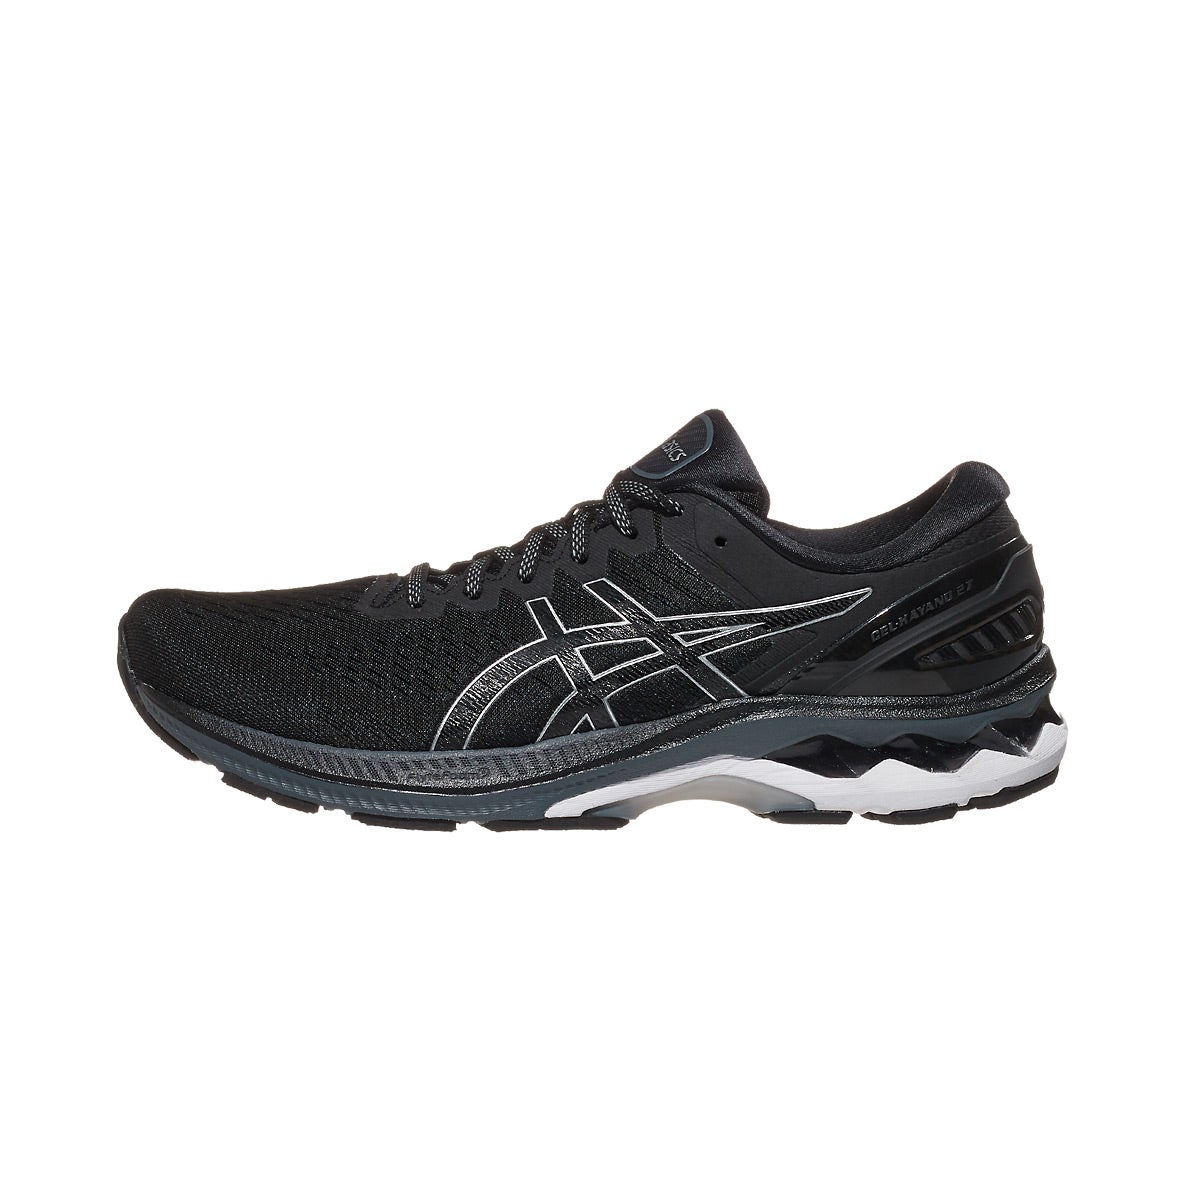 ASICS Gel Kayano 27 Men's Shoes Black/Pure Silver 360° View | Running ...